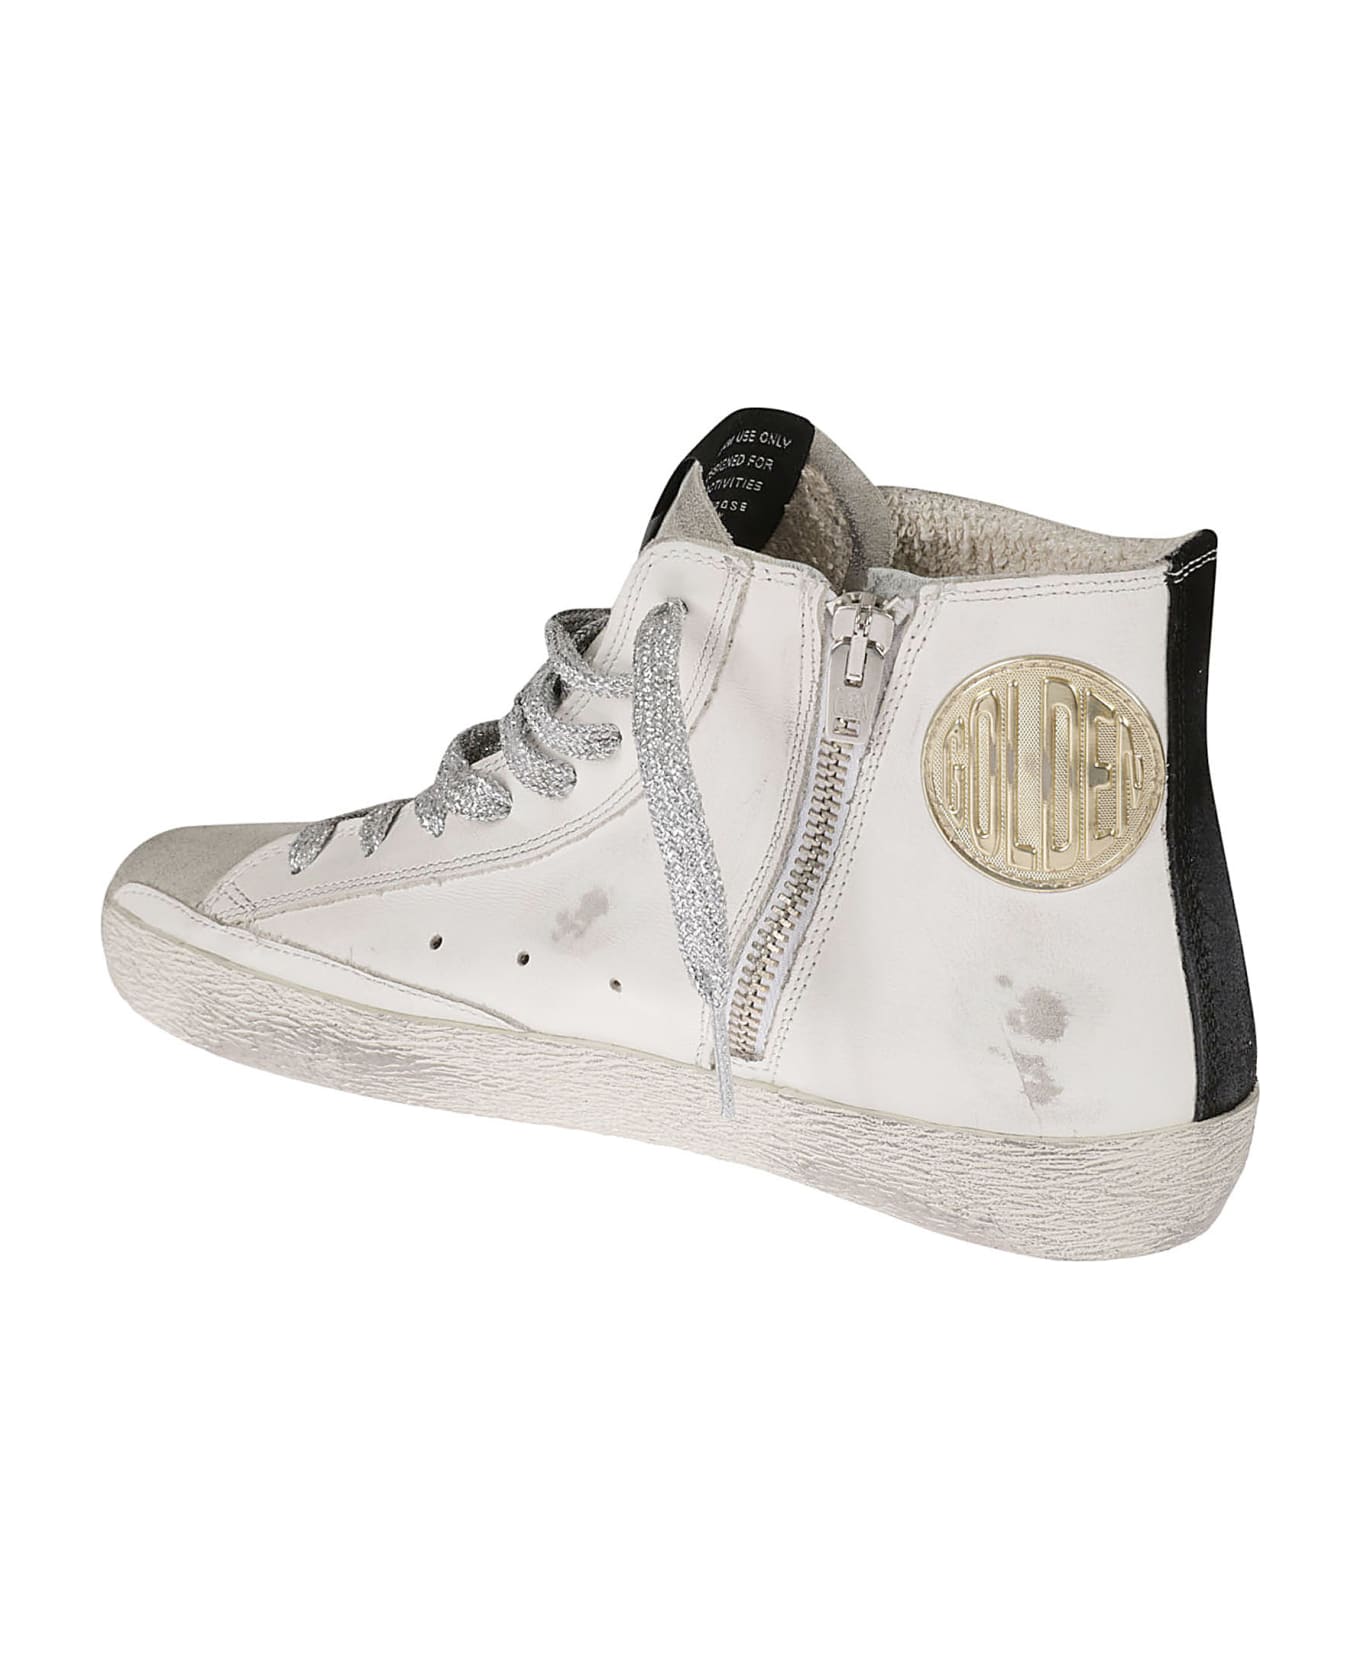 Golden Goose Francy Classic Sneakers - White/Ice/Fuchsia/Black